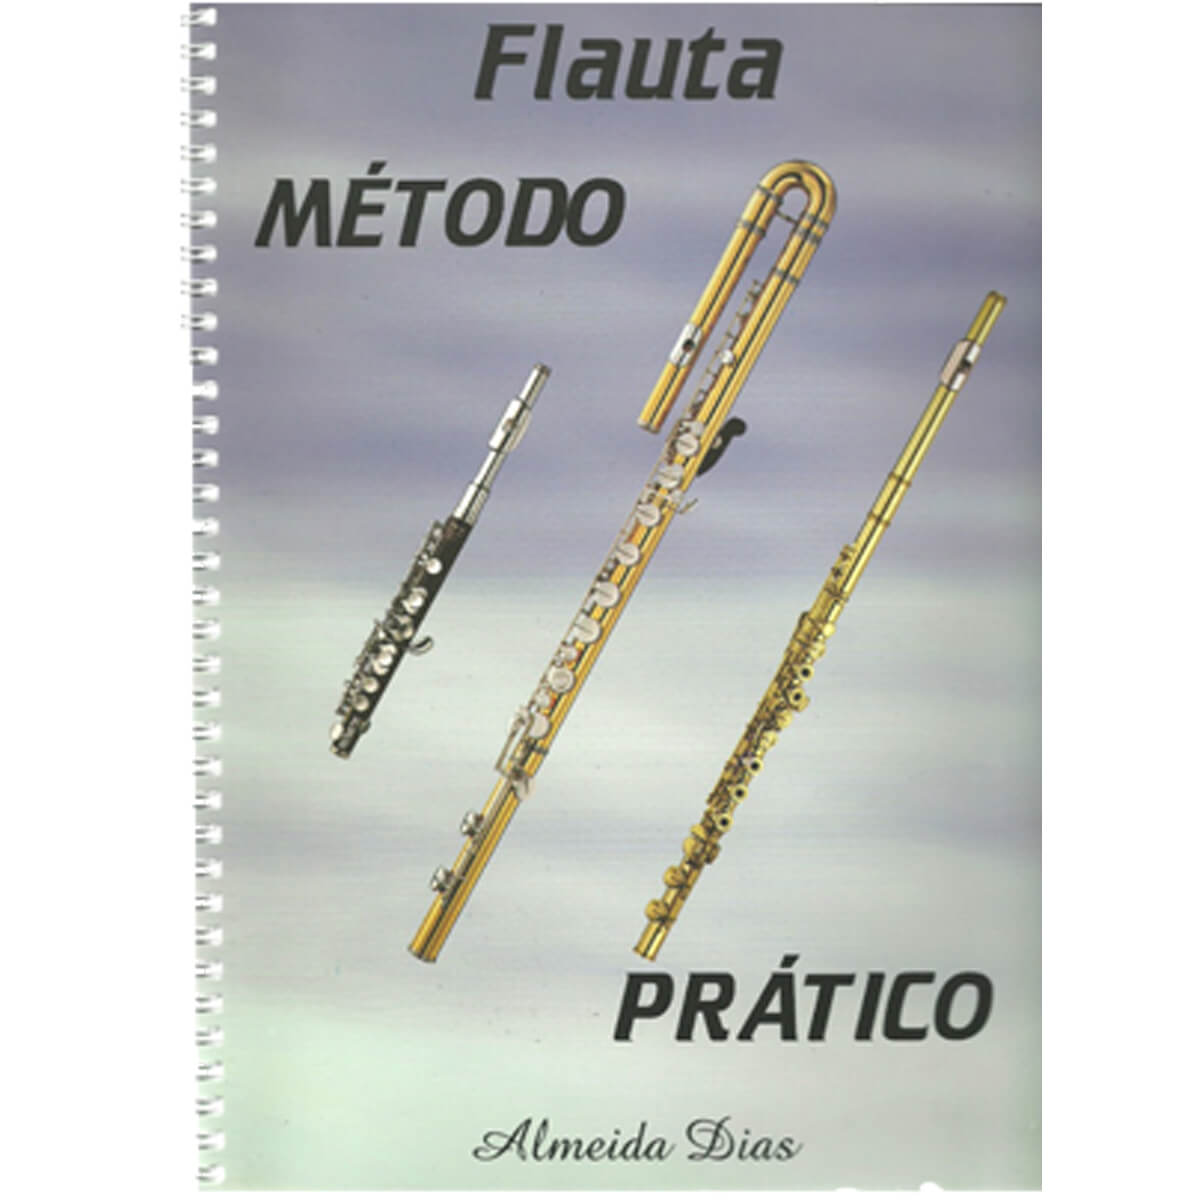 Método - Almeida Dias - Flauta